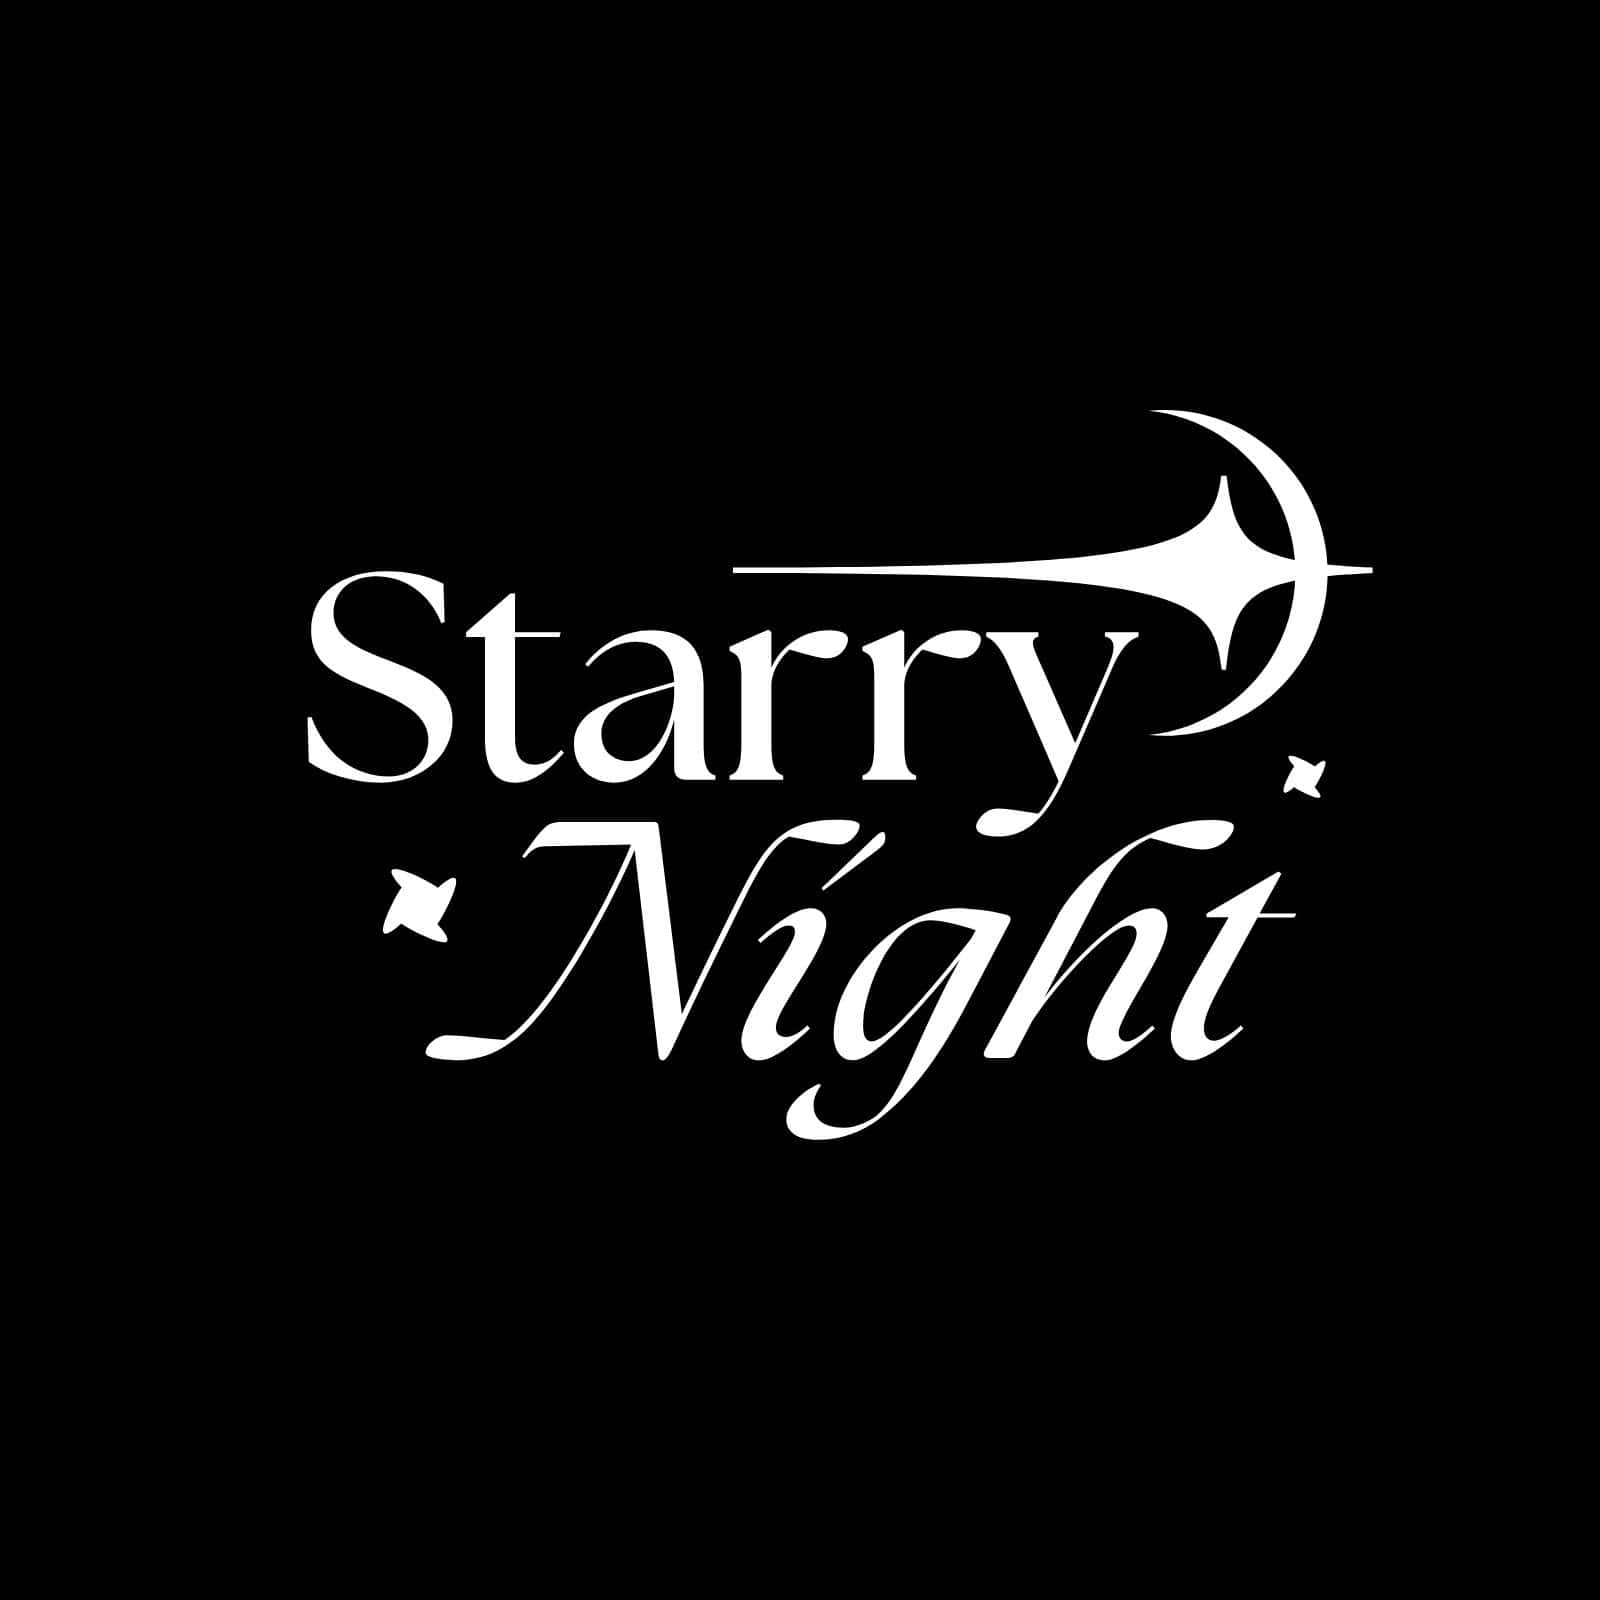 Starry Night Graphic Design Wallpaper